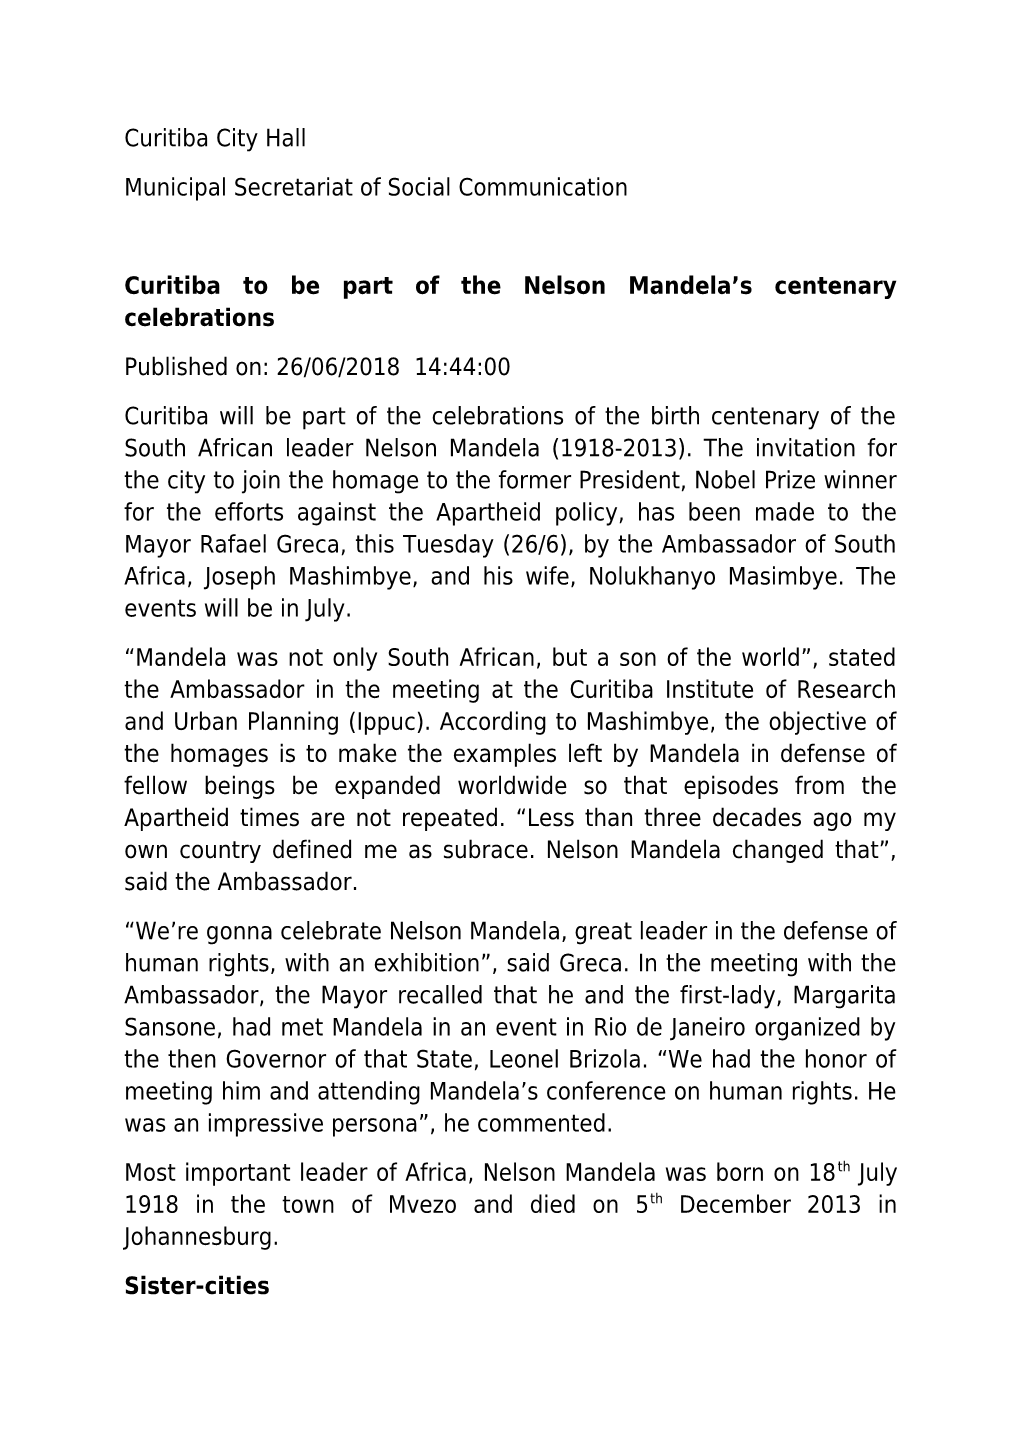 Curitiba to Be Part of the Nelson Mandela S Centenary Celebrations